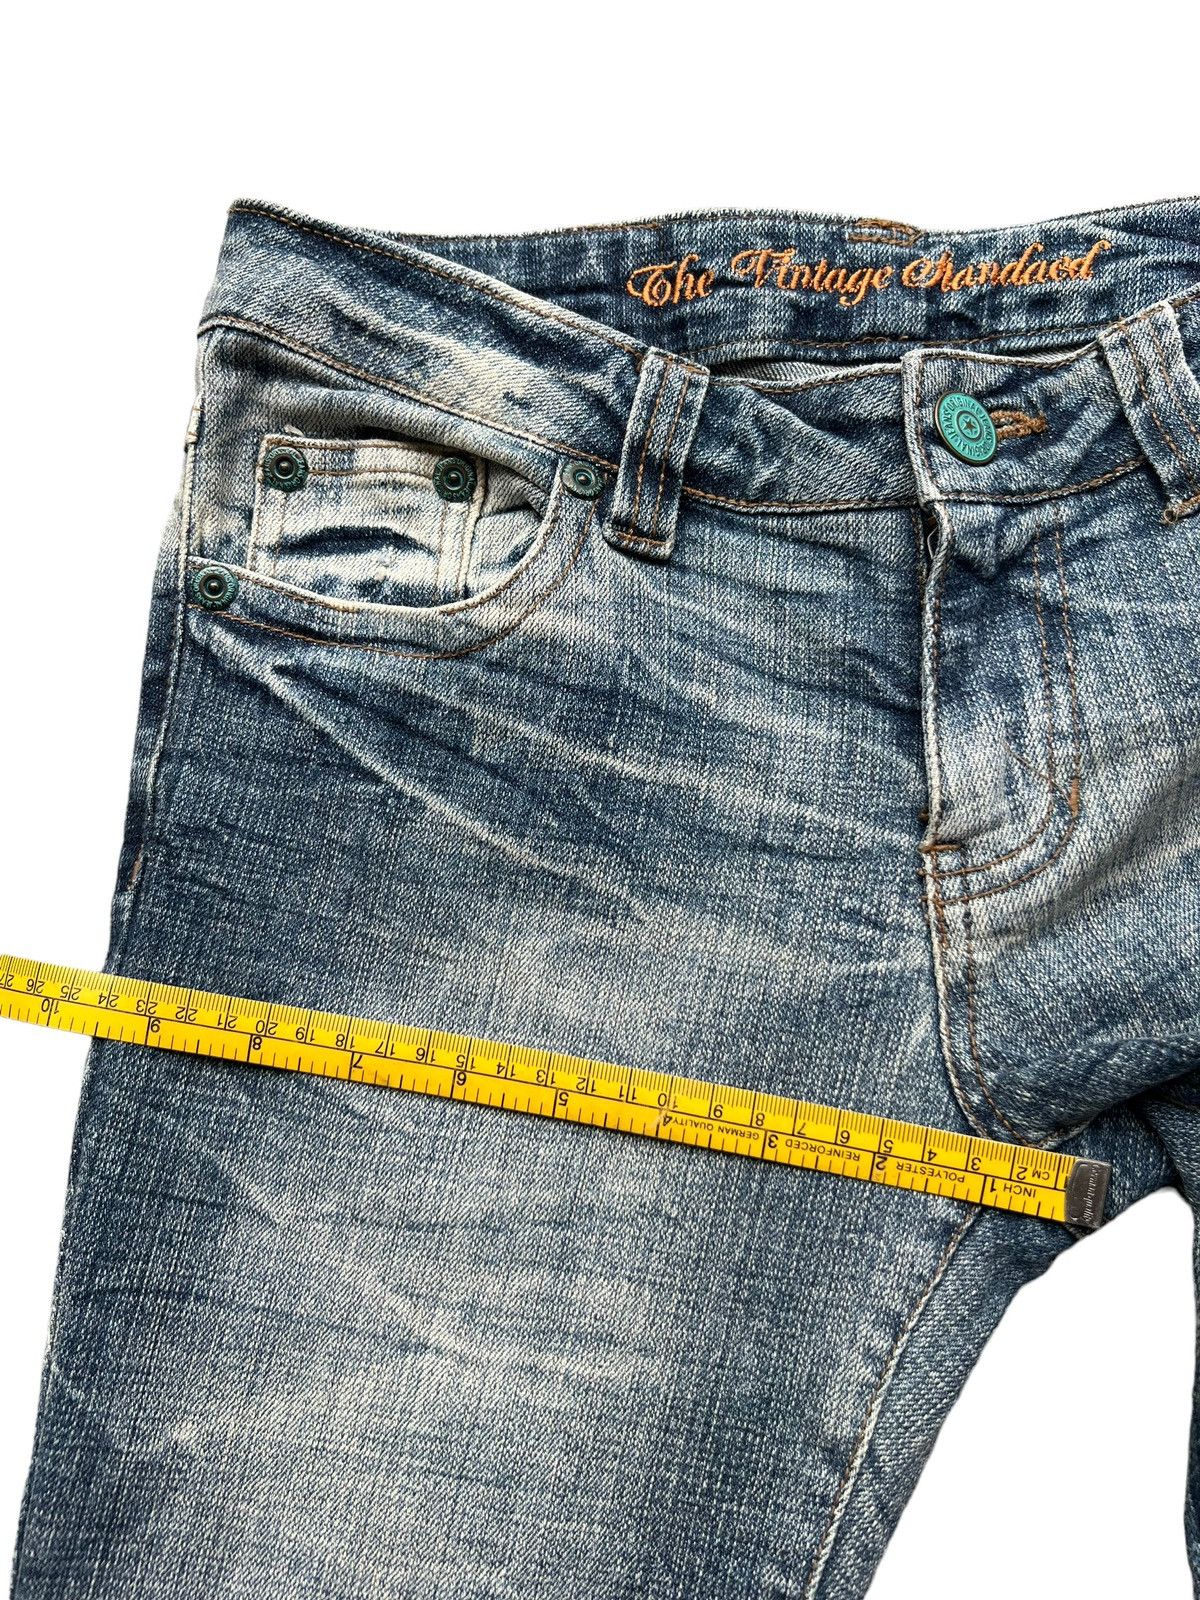 Hype - Vintage Standard Distressed Lowrise Flare Denim Jeans 29x32 - 13